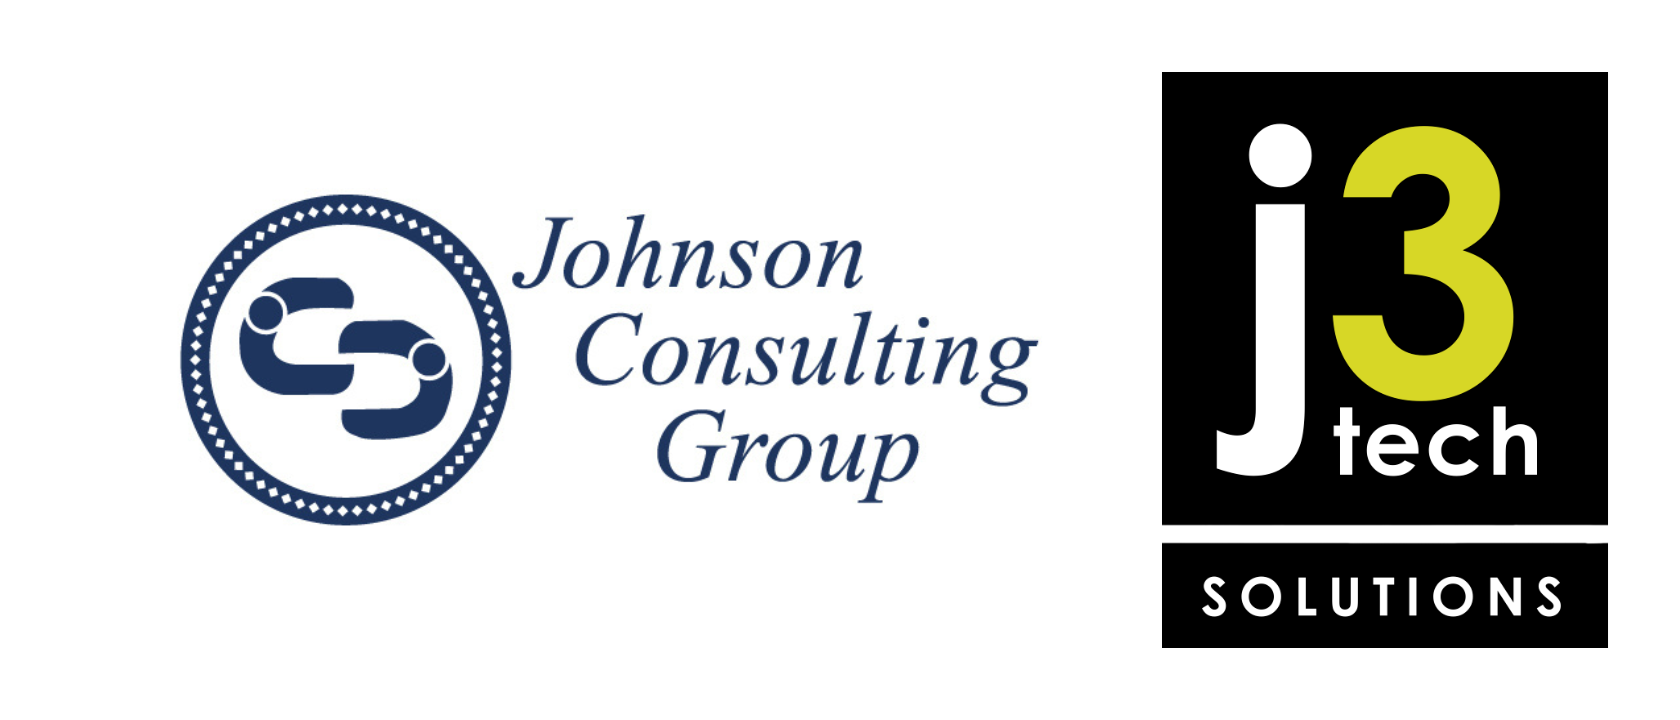 Johnson Consulting J3Tech logos